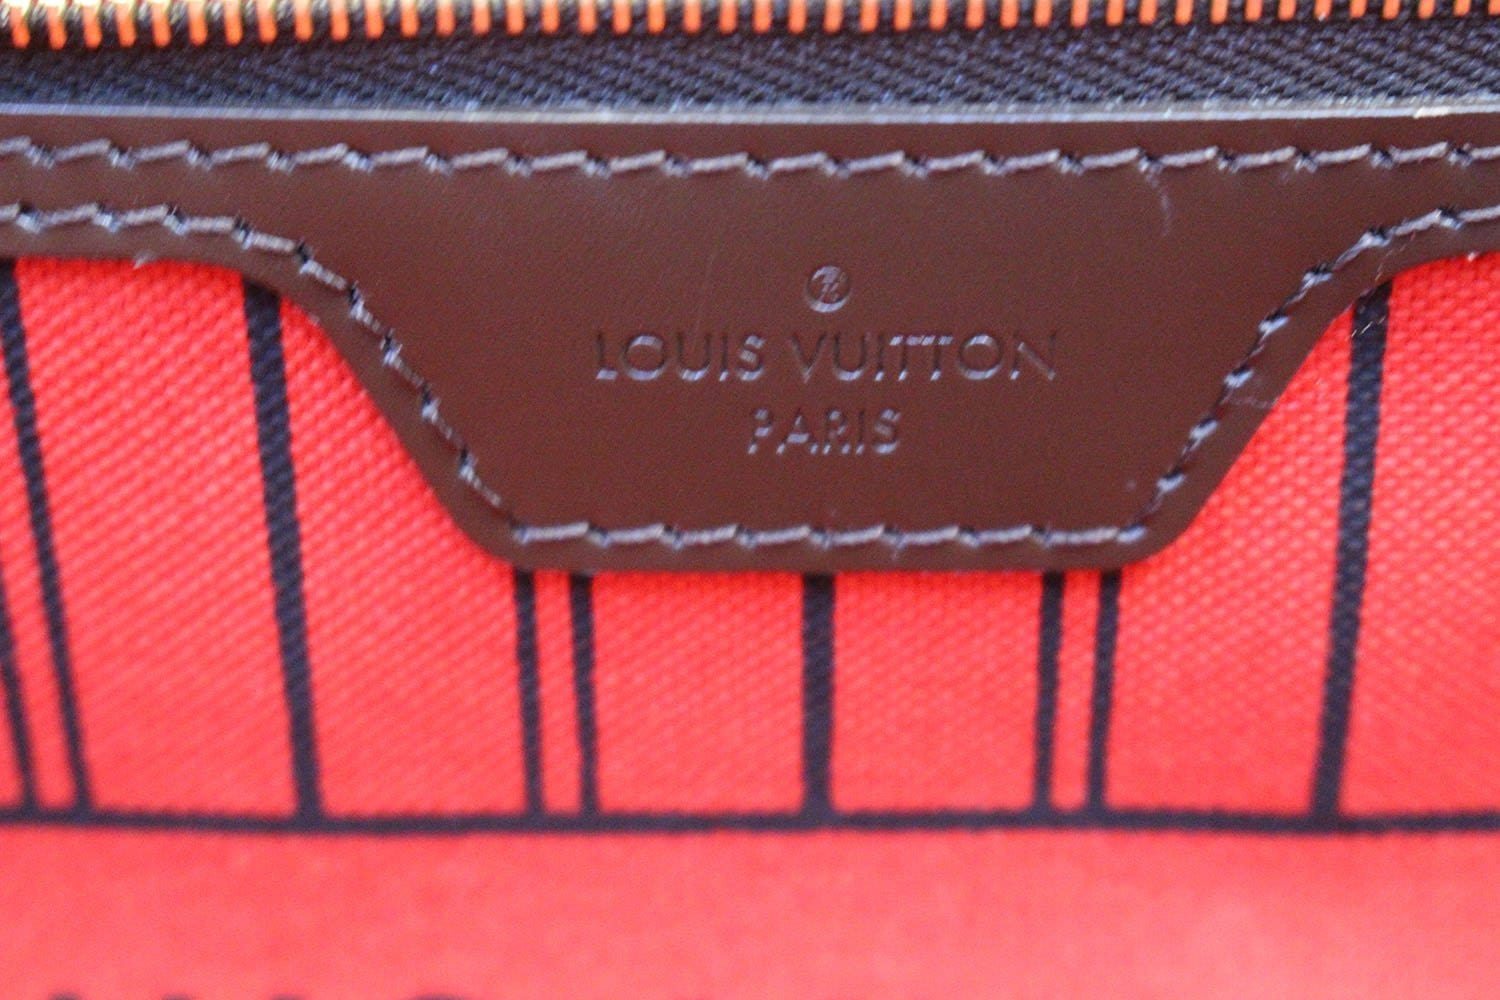 PRELOVED Louis Vuitton Damier Ebene Neverfull GM Tote Bag SD4127